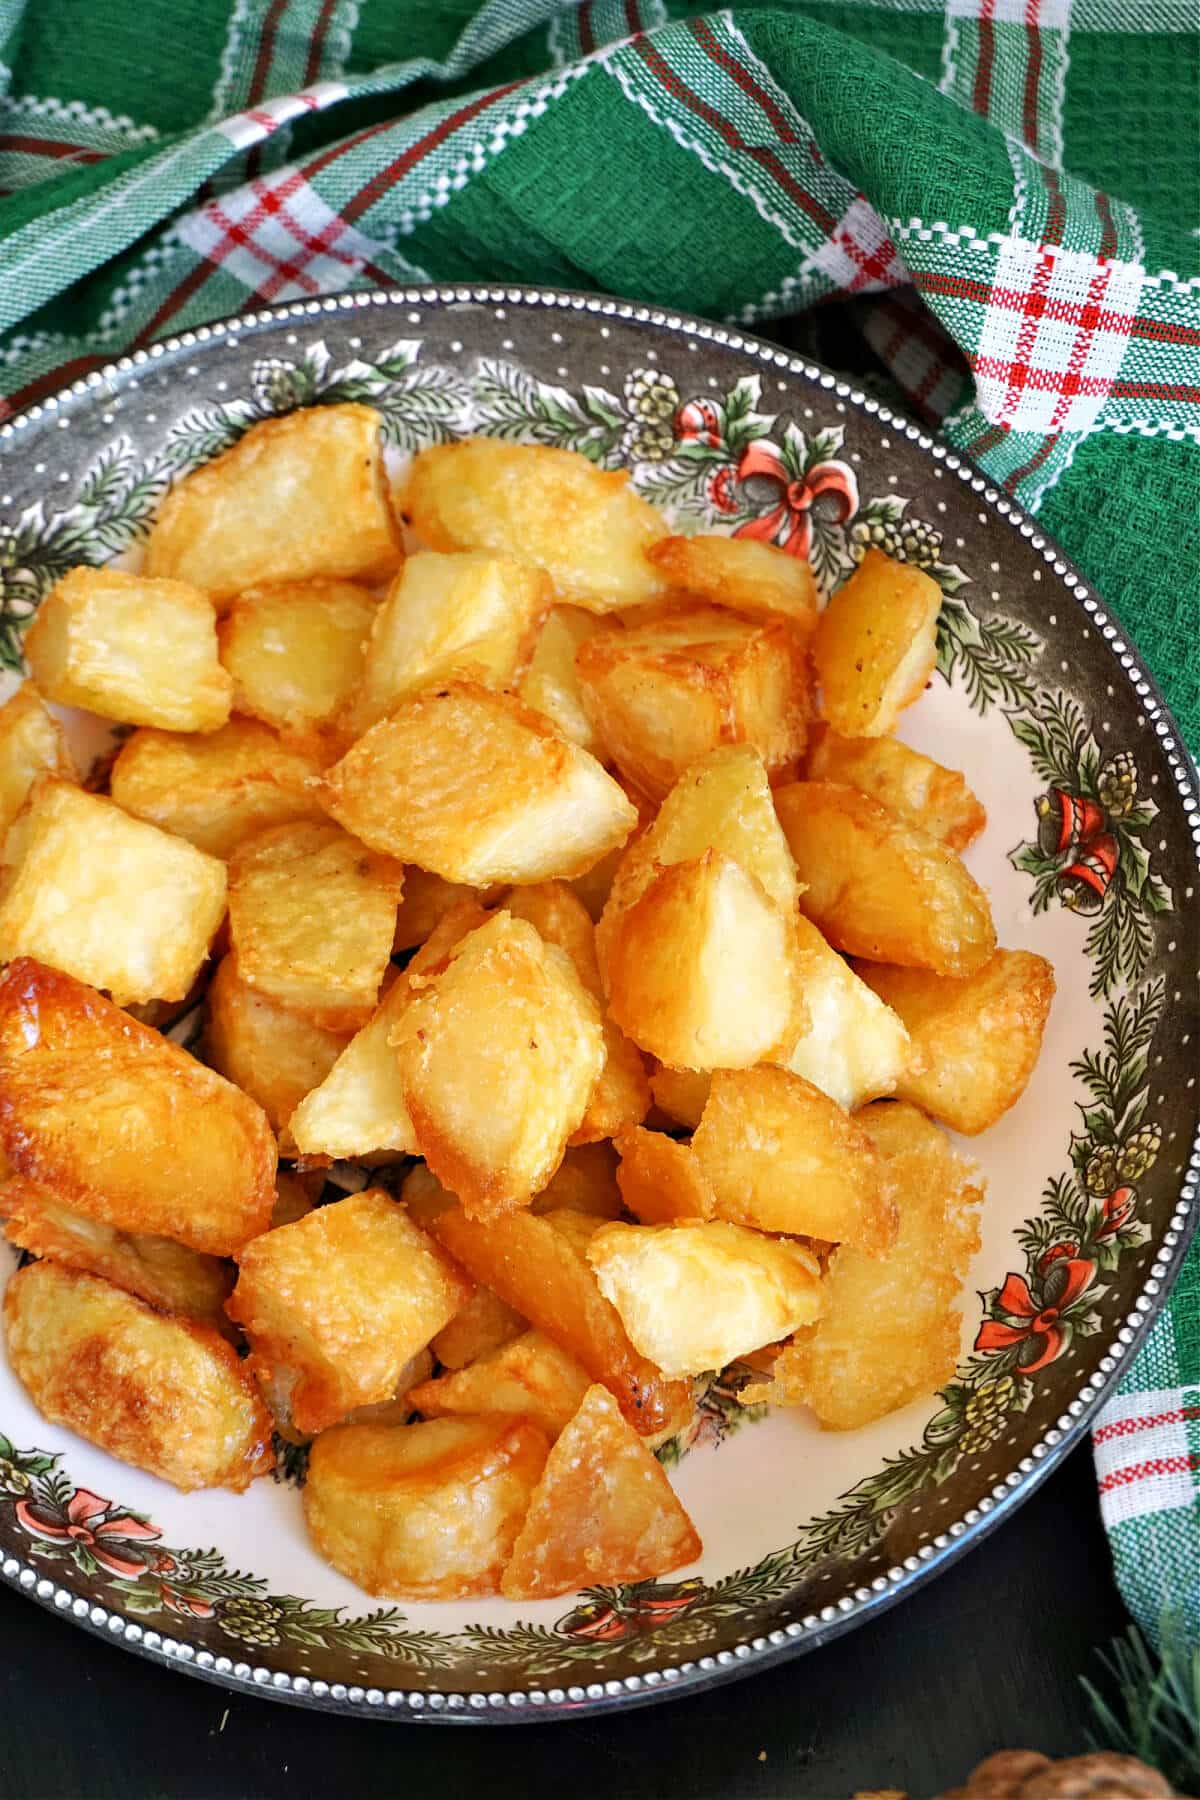 A bowl with roast potatoes.